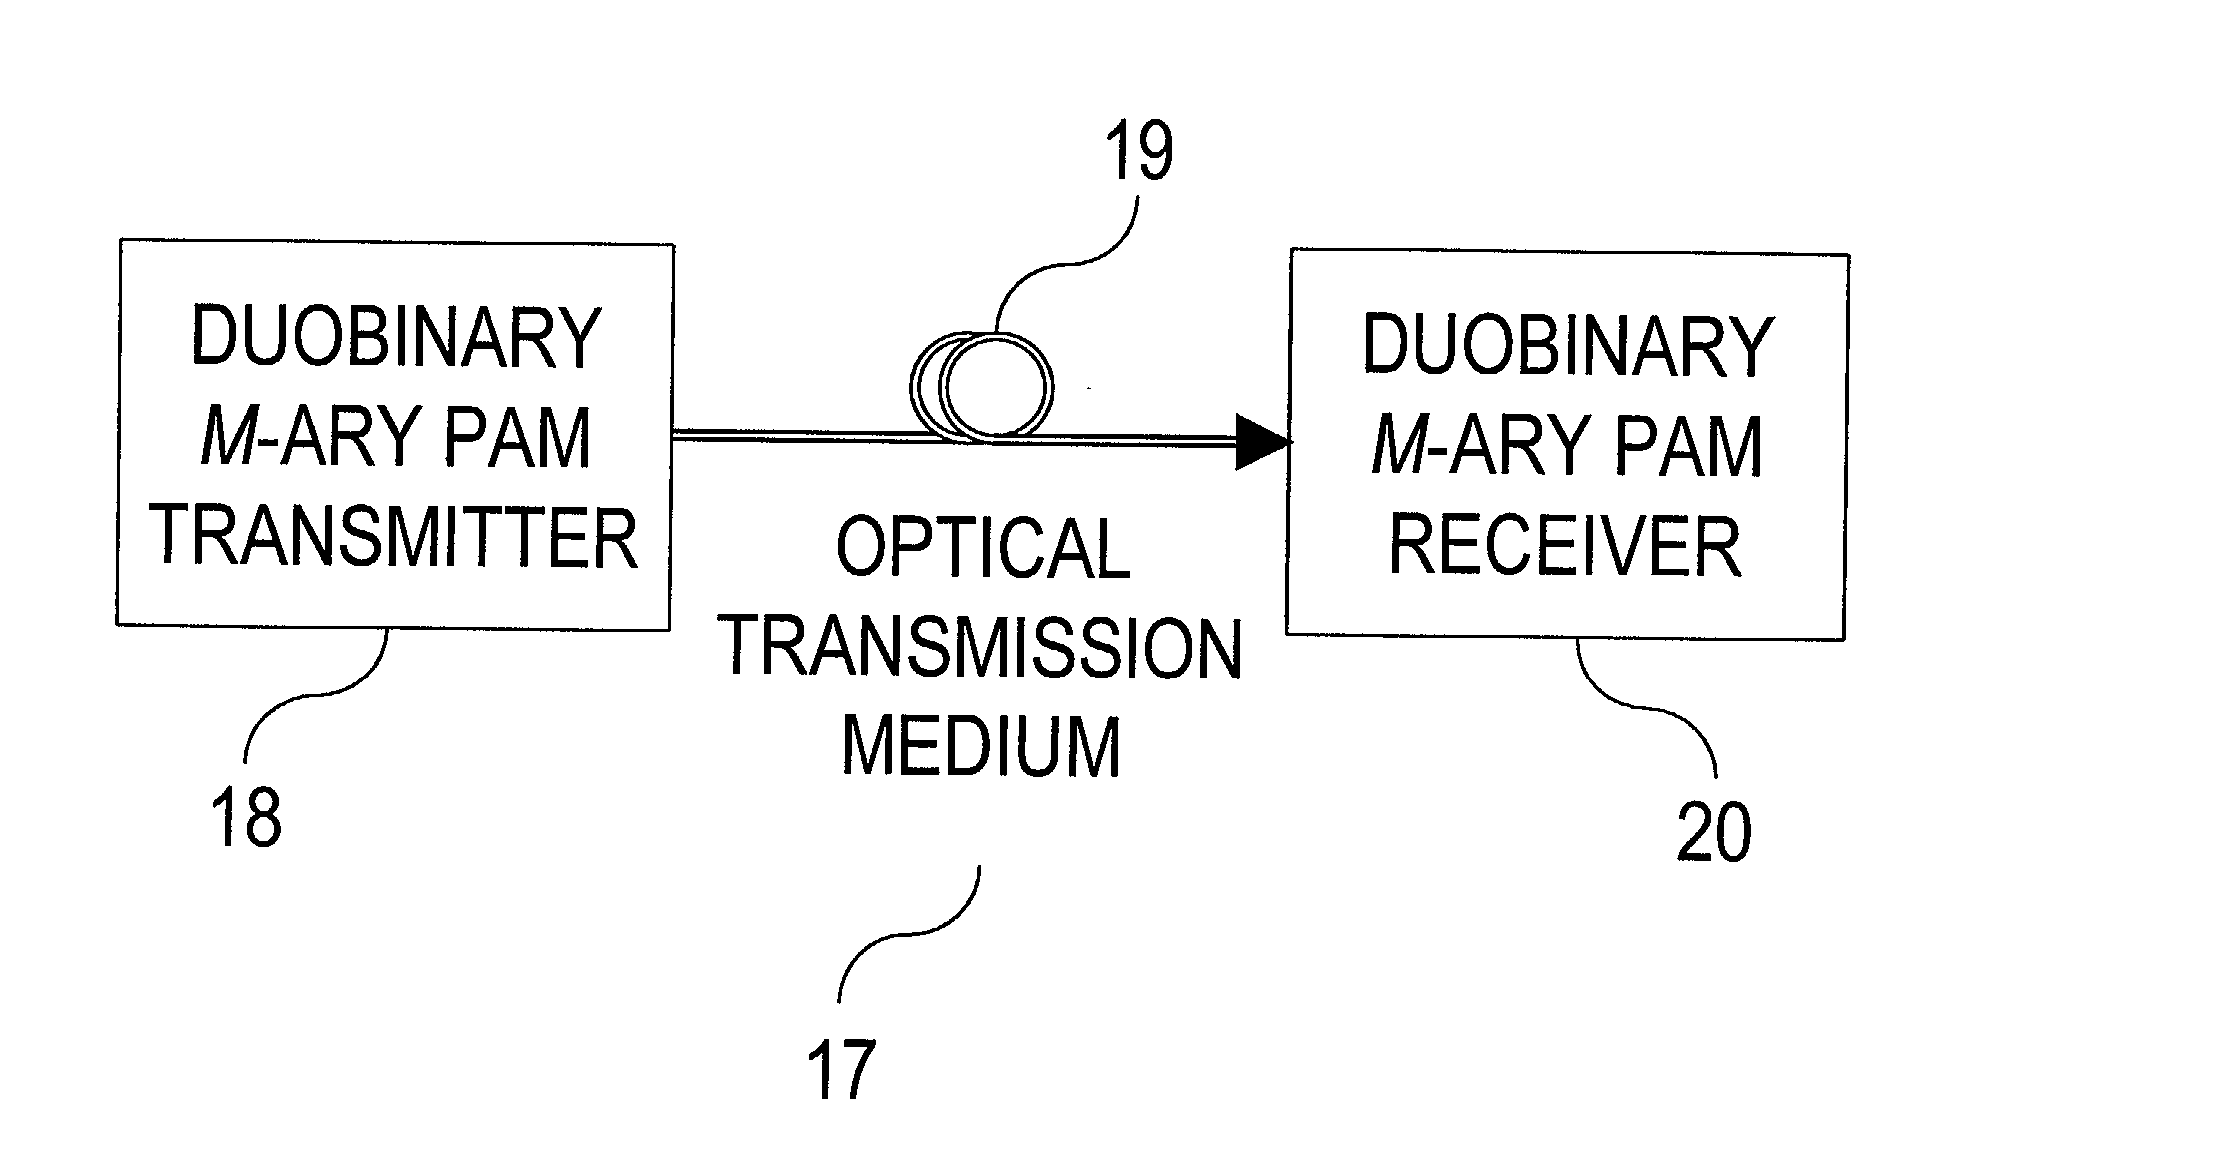 Transmission and reception of duobinary multilevel pulse-amplitude-modulated optical signals using finite-state machine-based encoder